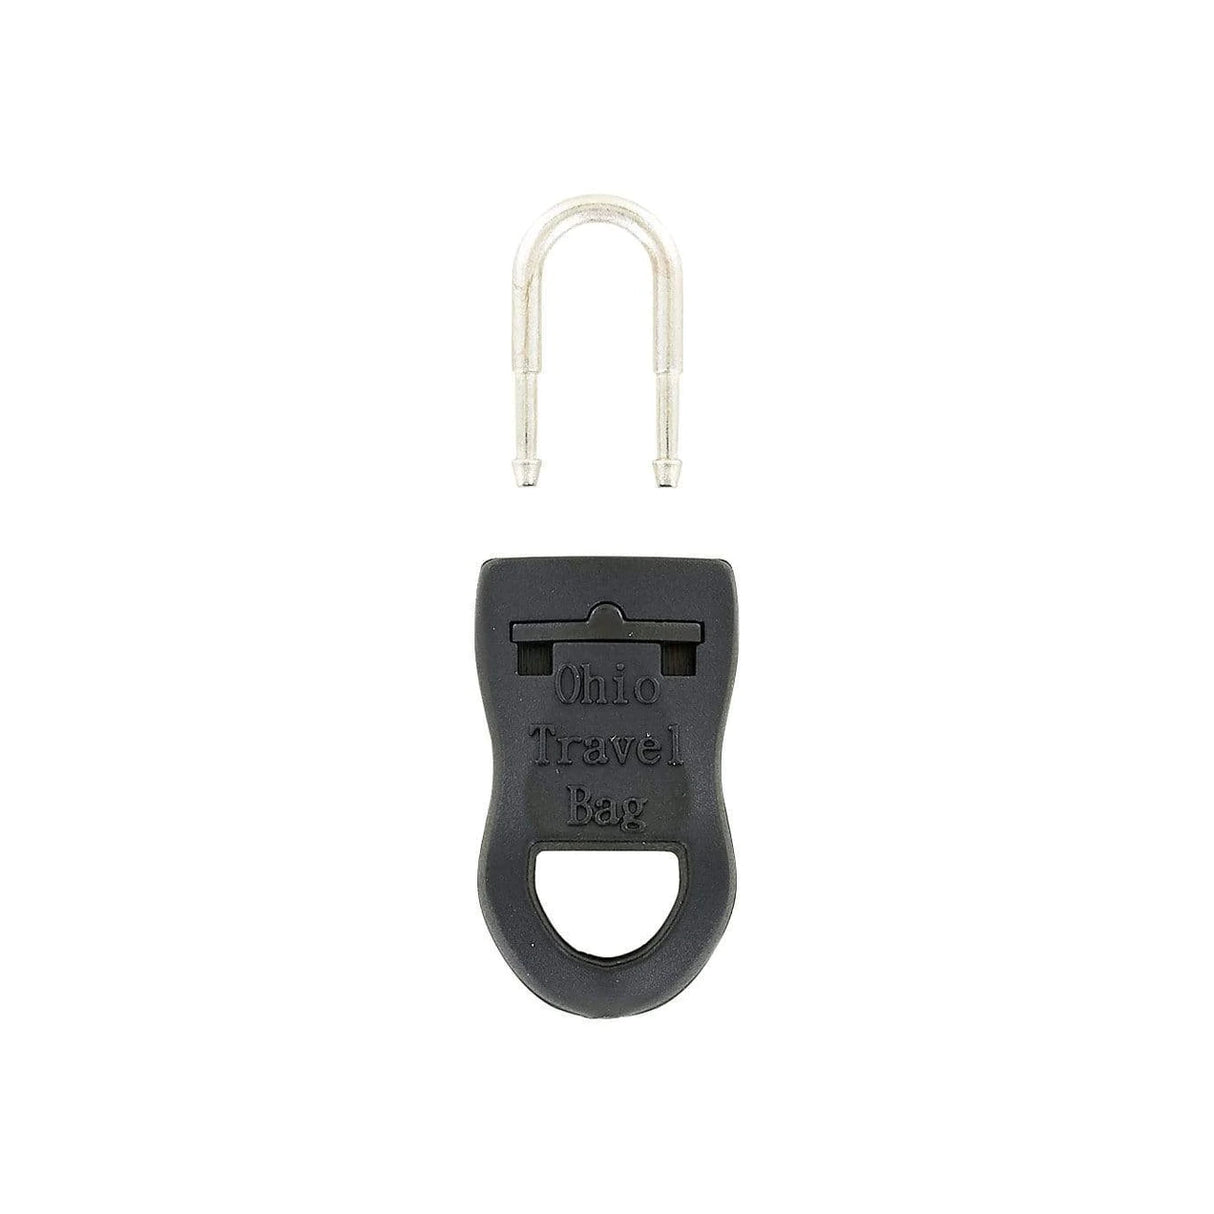 1" Black, Small Zipper Fixer, Plastic, #ZF-1